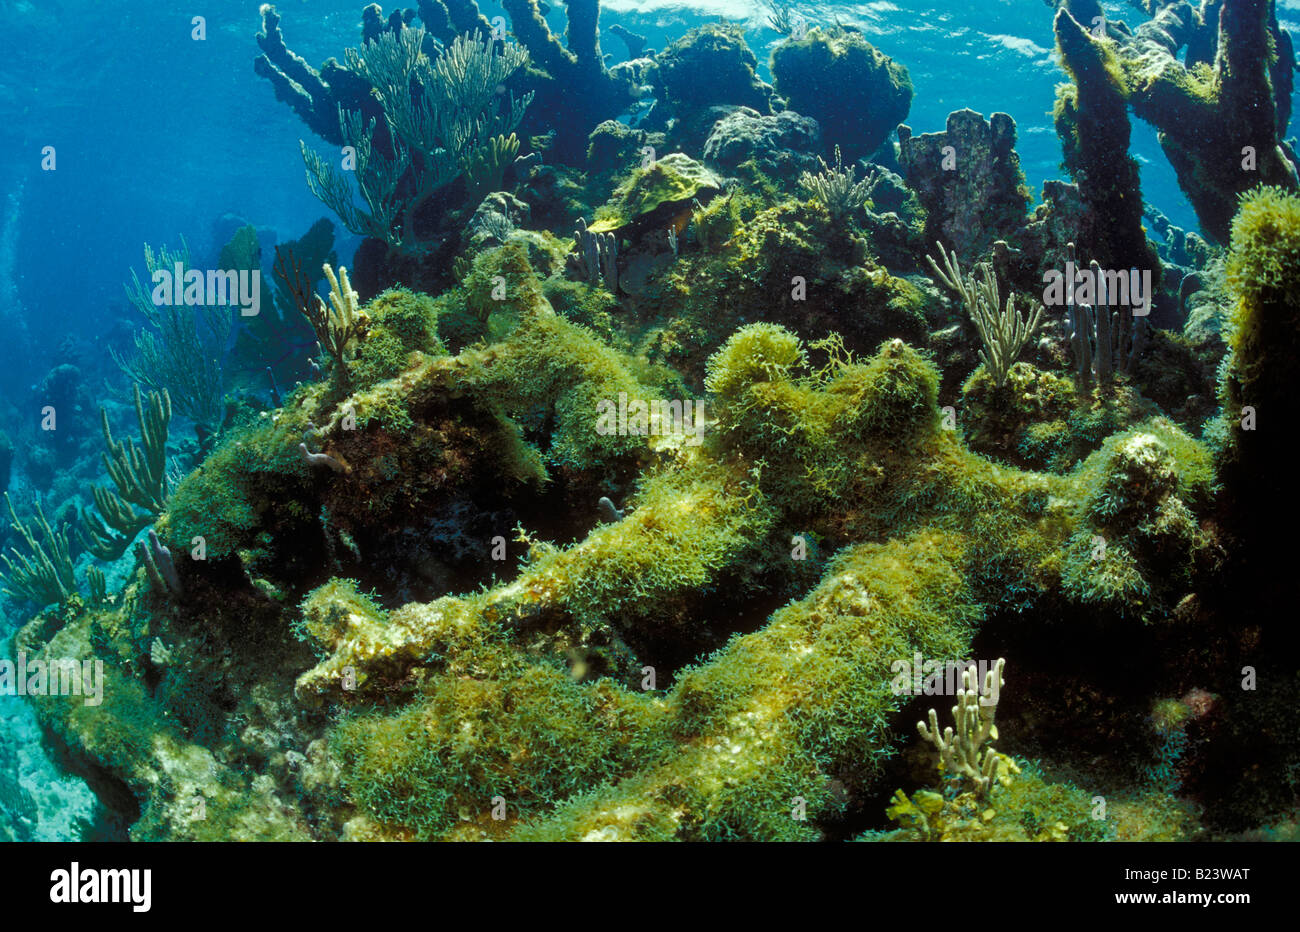 Algae growing on reef. Stock Photo